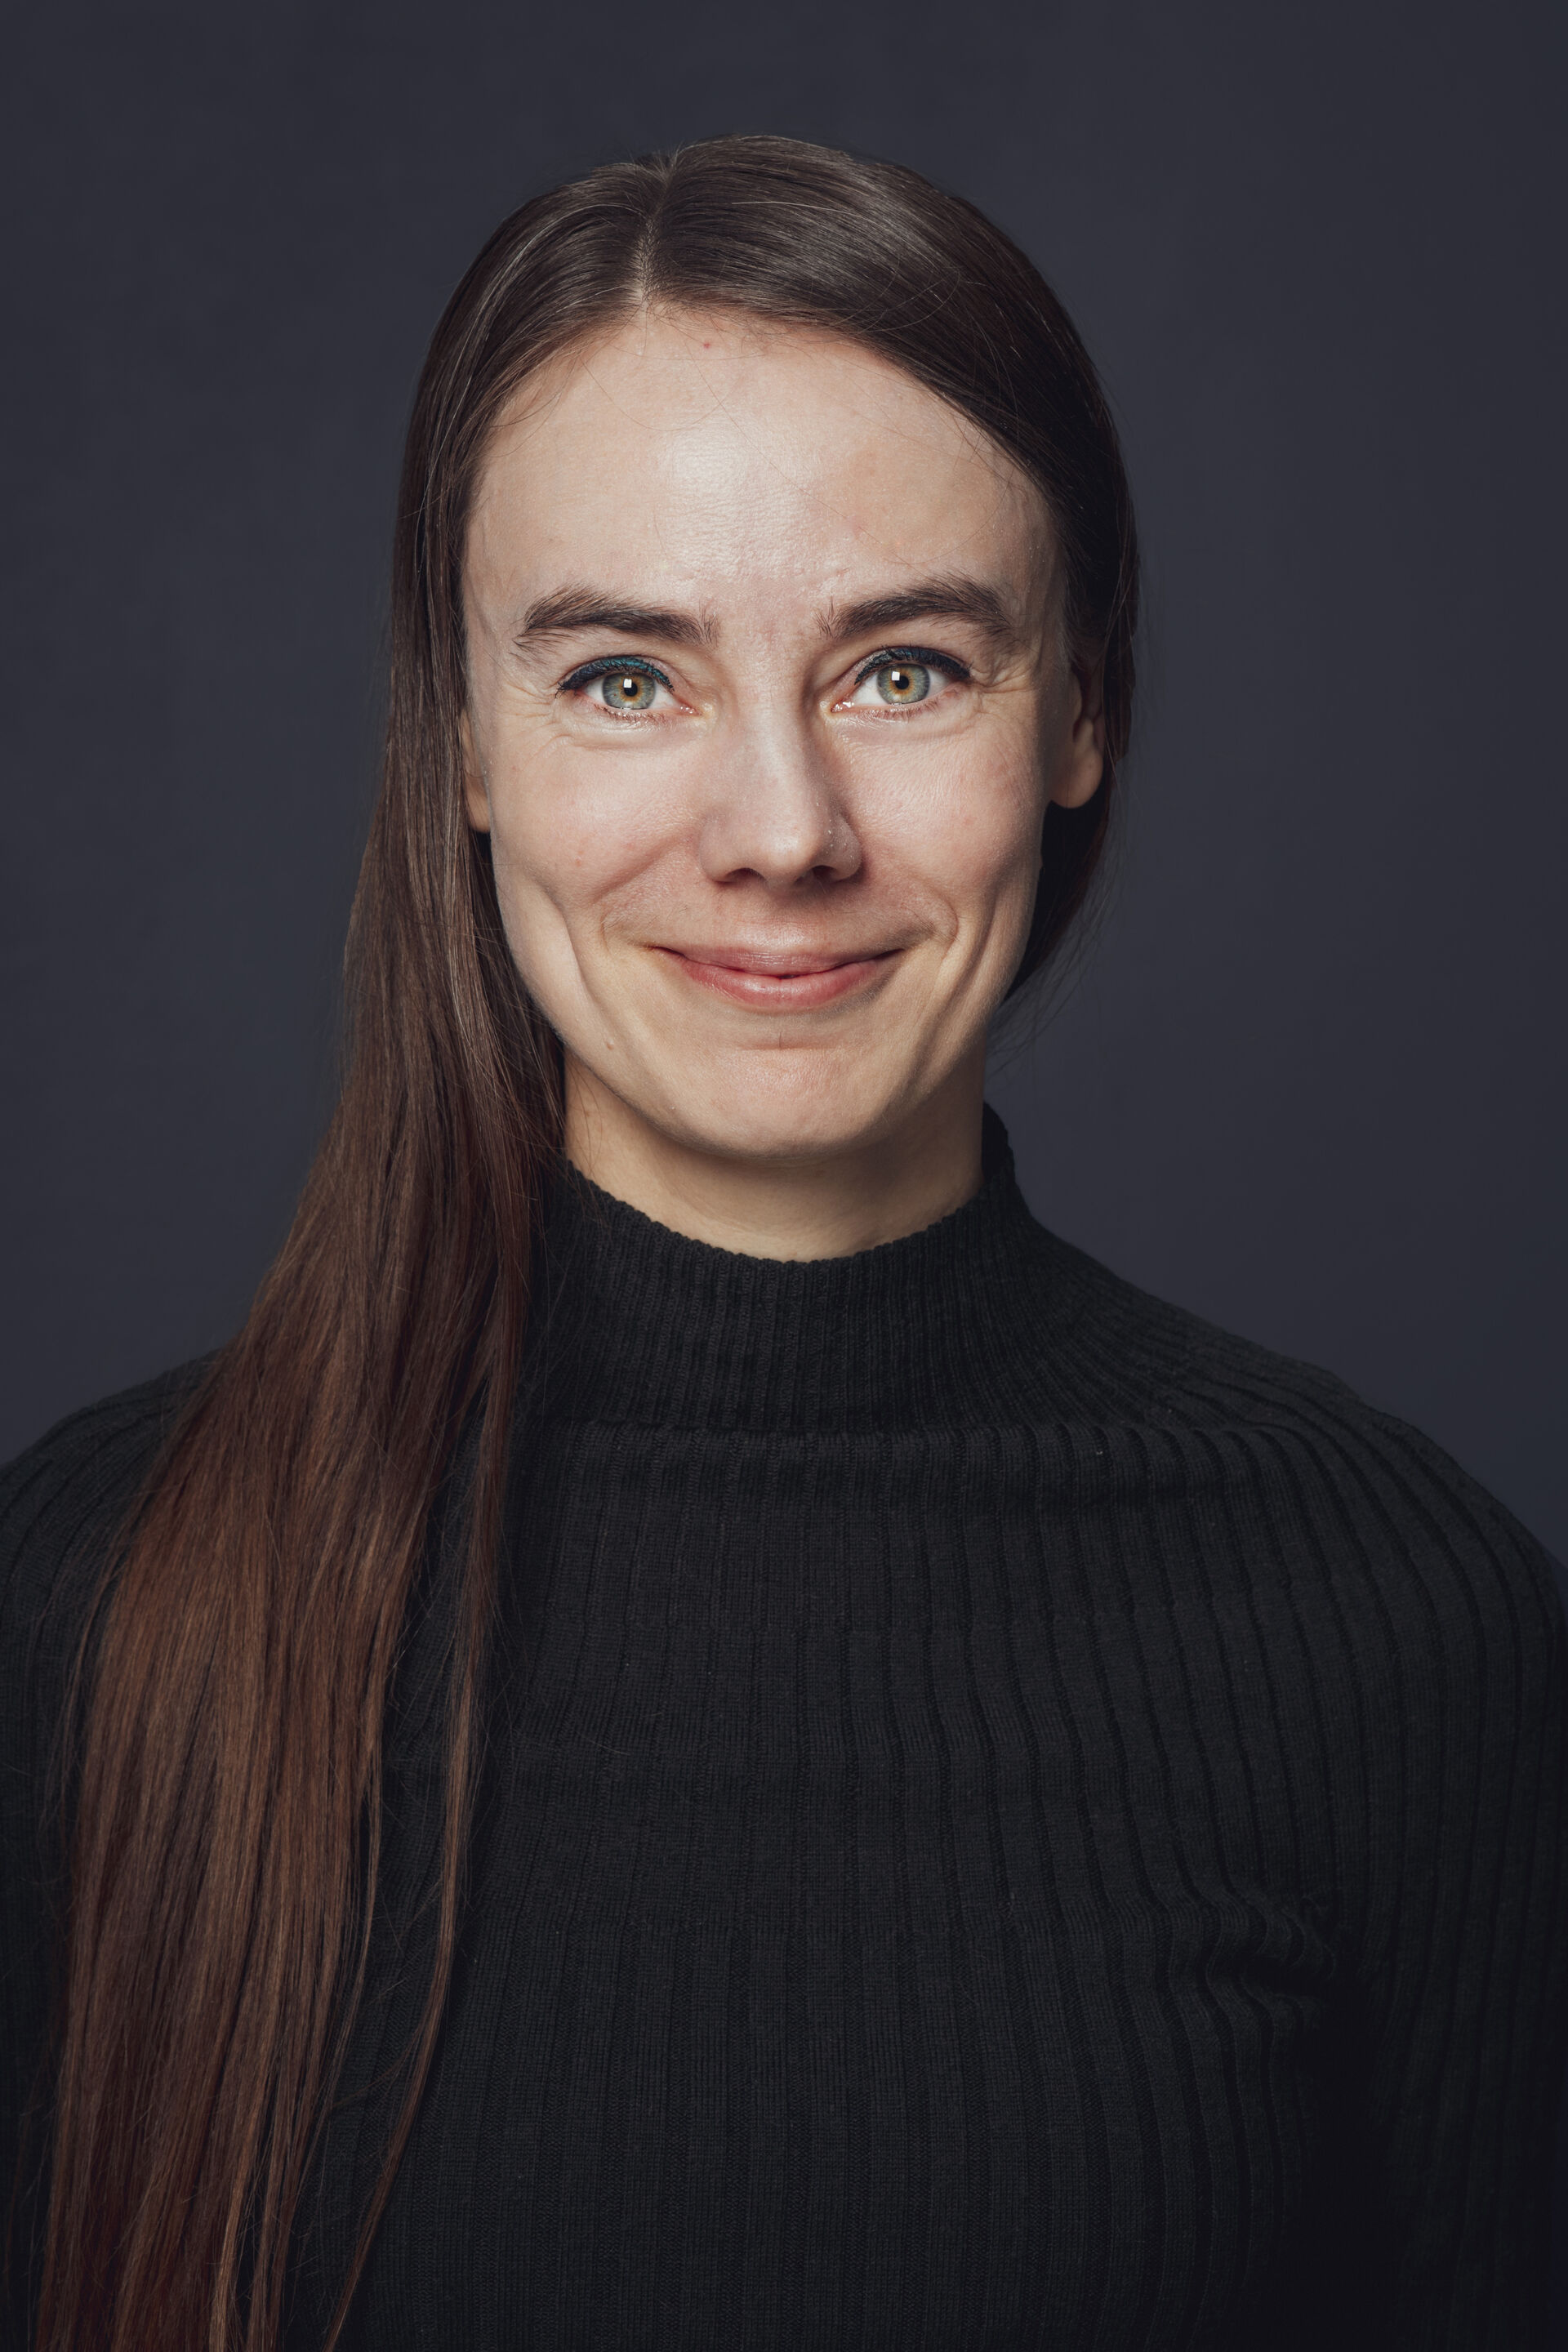 profile picture of Marieke Kuijer.